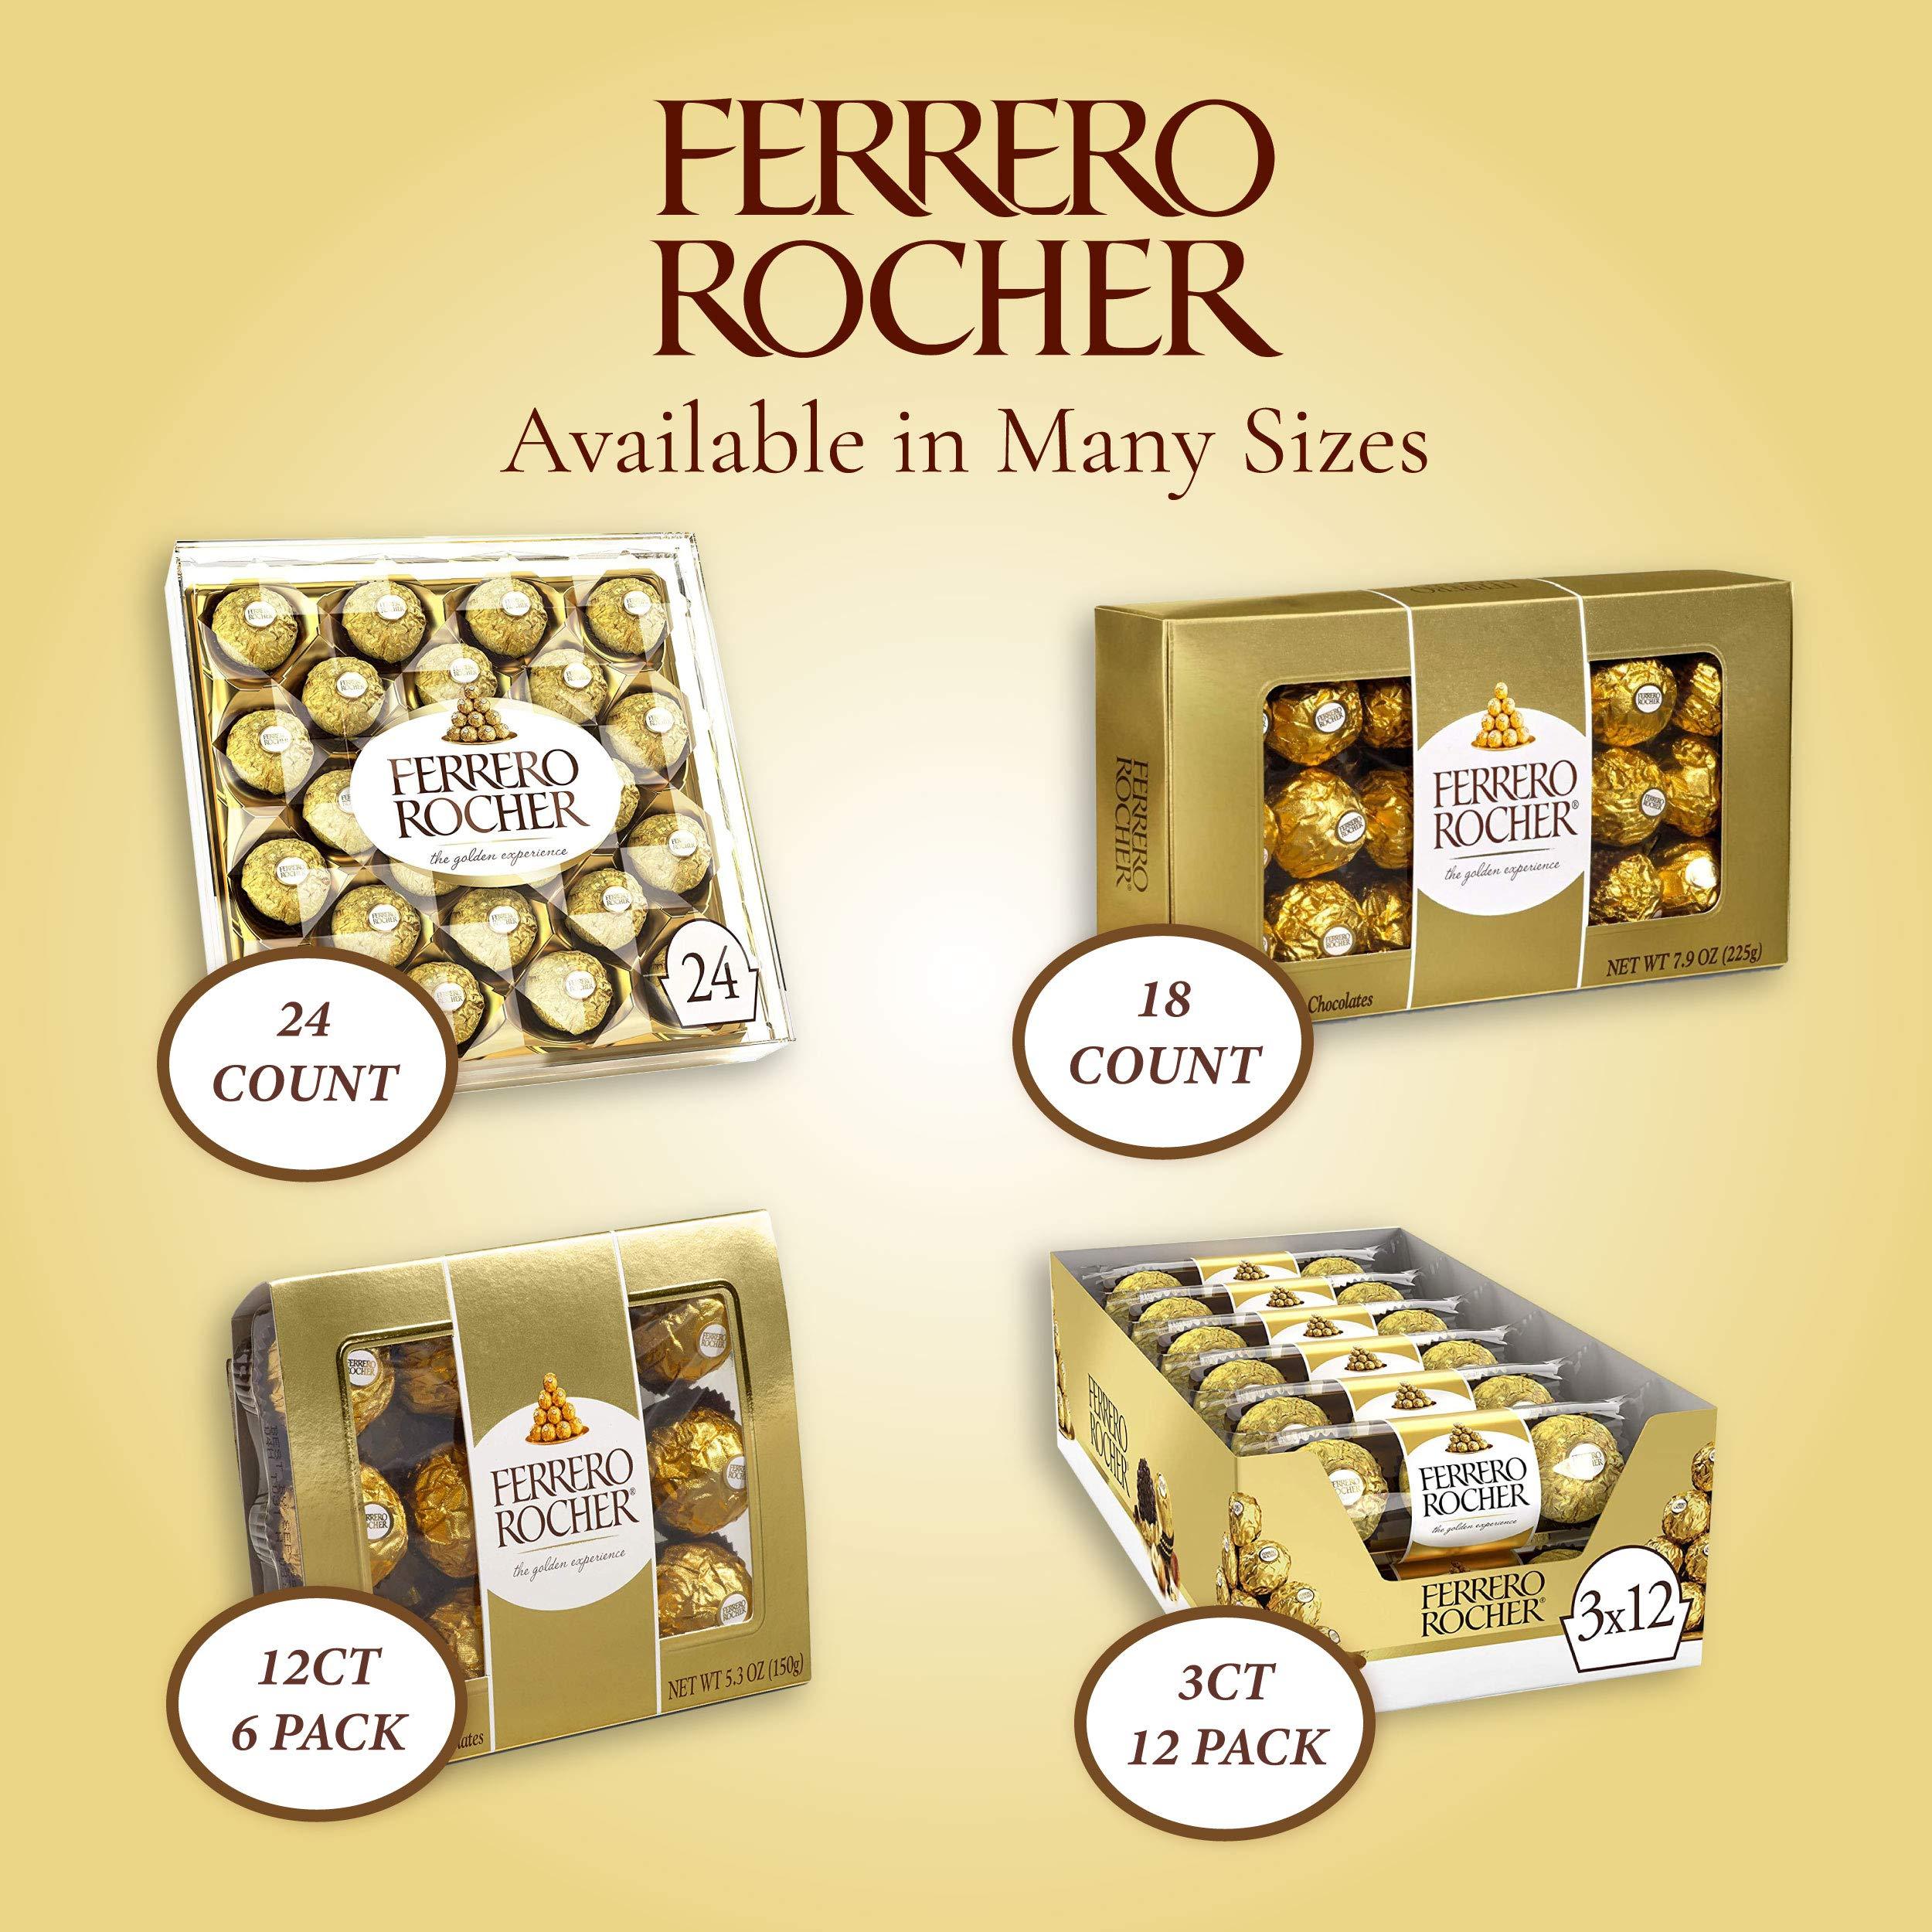 Ferrero Rocher Fine Hazelnut Milk Chocolate, 24 Count, Chocolate Candy Gift Box, 10.5 oz 24 Count (Pack of 1) Ferrero Rocher - image 5 of 7